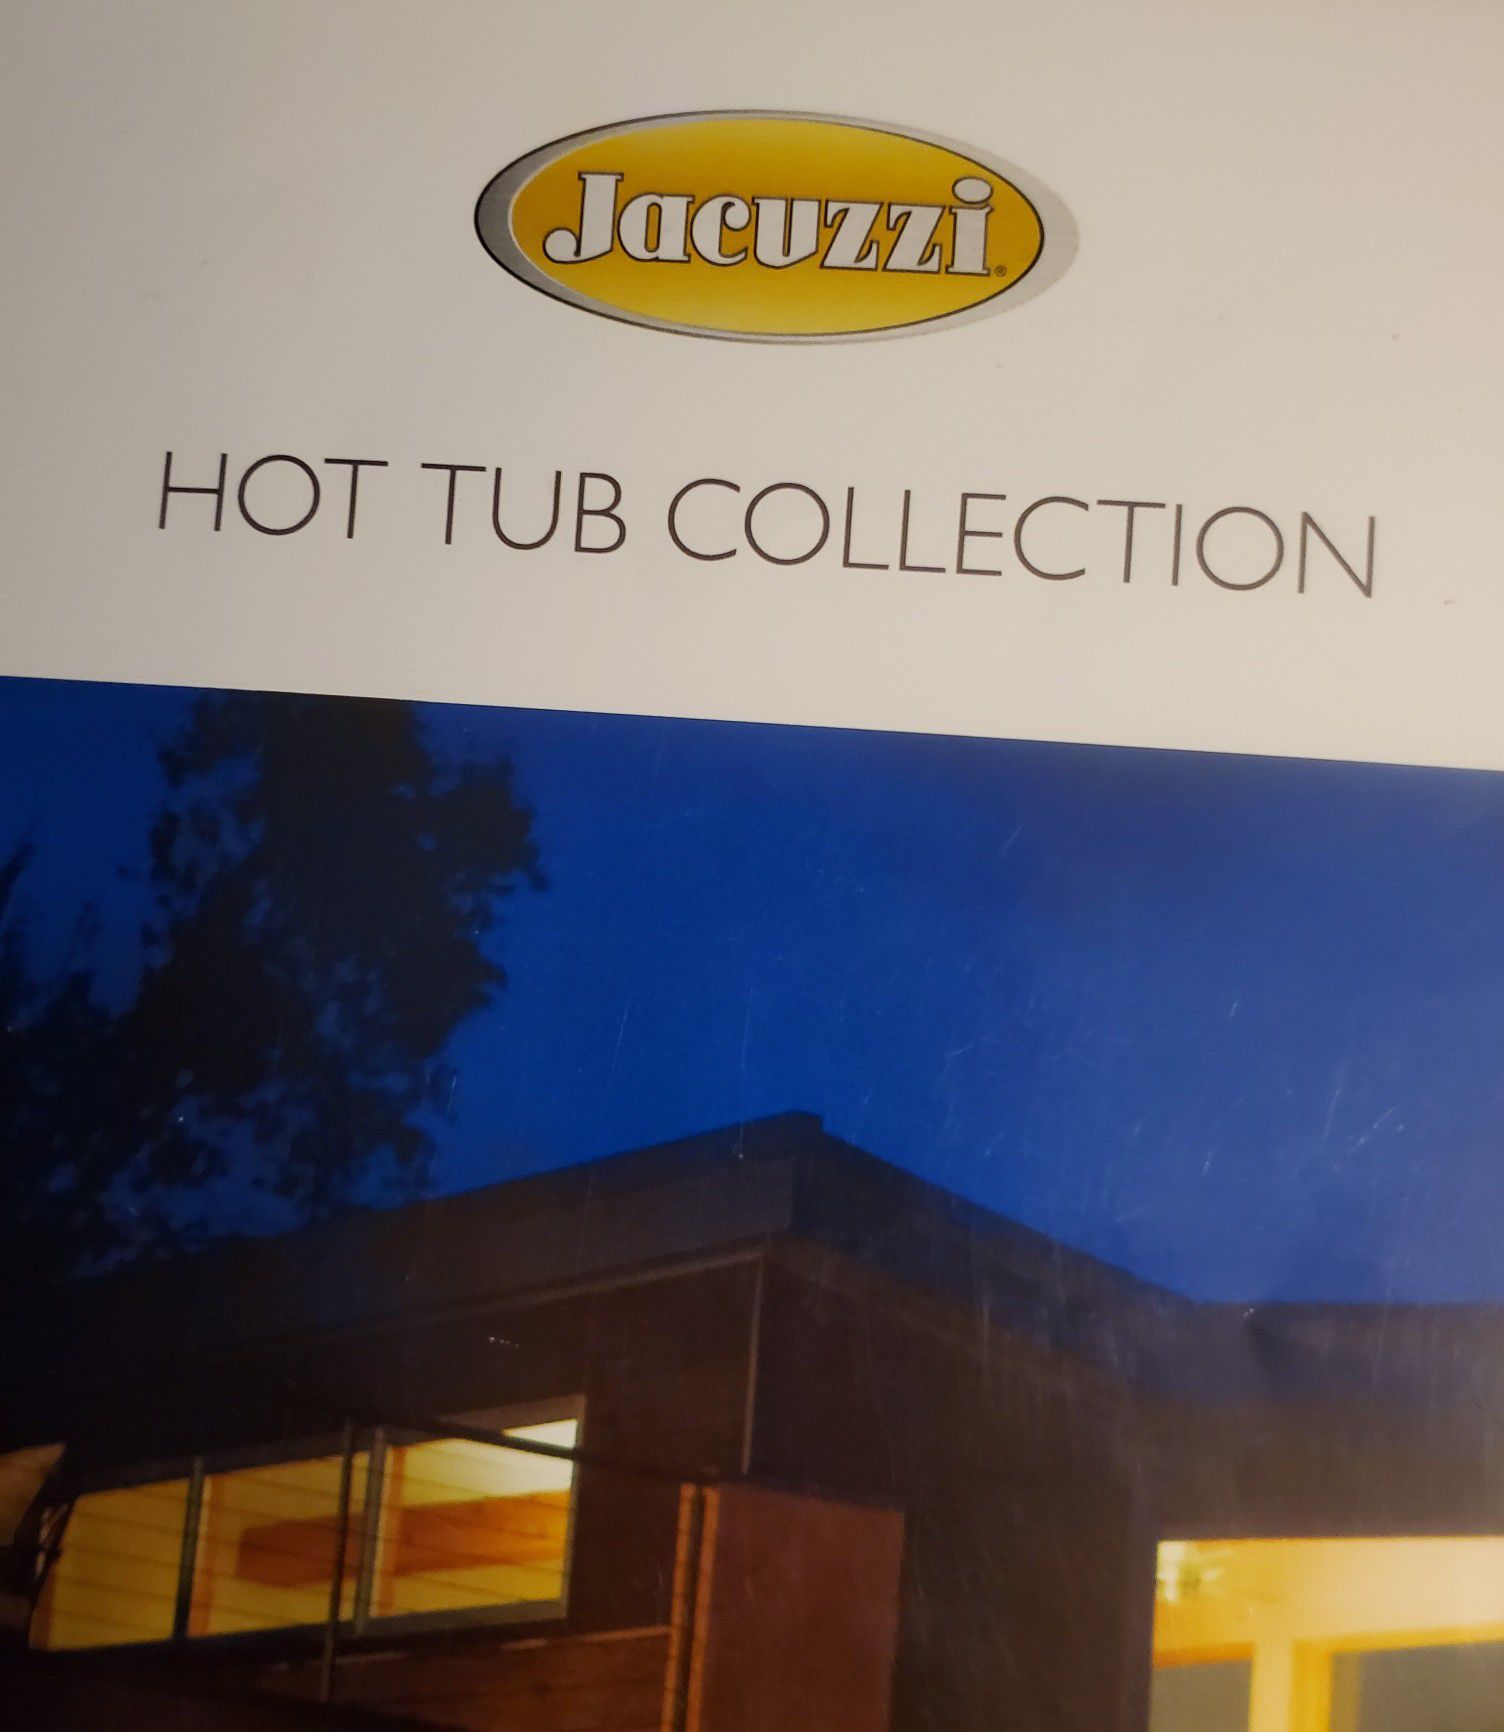 Jacuzzi Hot Tub